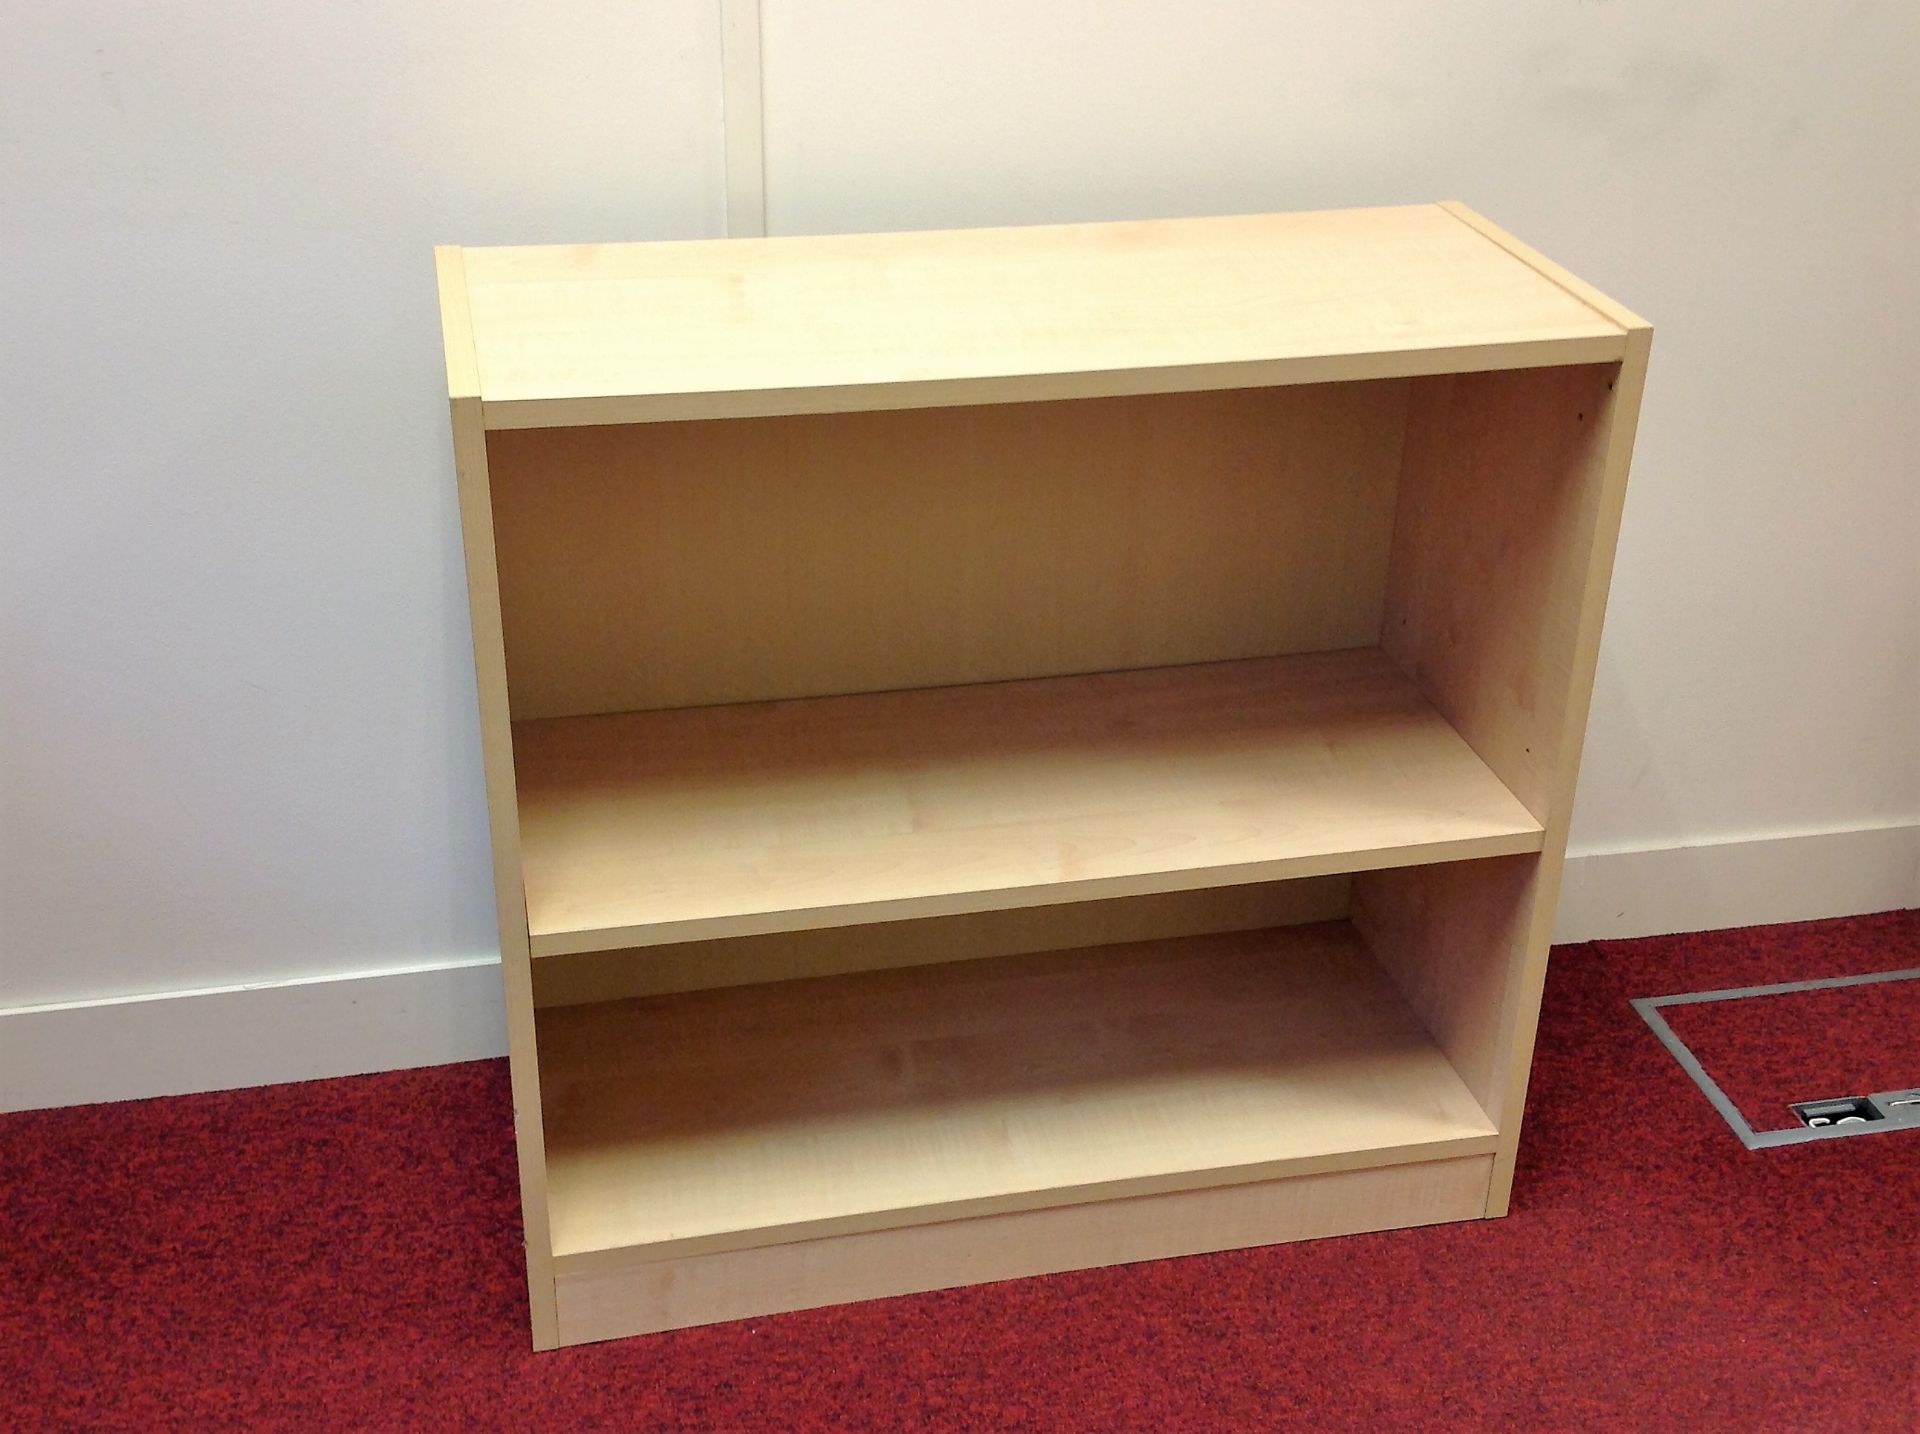 Bookshelf With One Shelf - Measurements: H~: 73cm W: 76cm D: 39cm - Image 2 of 2